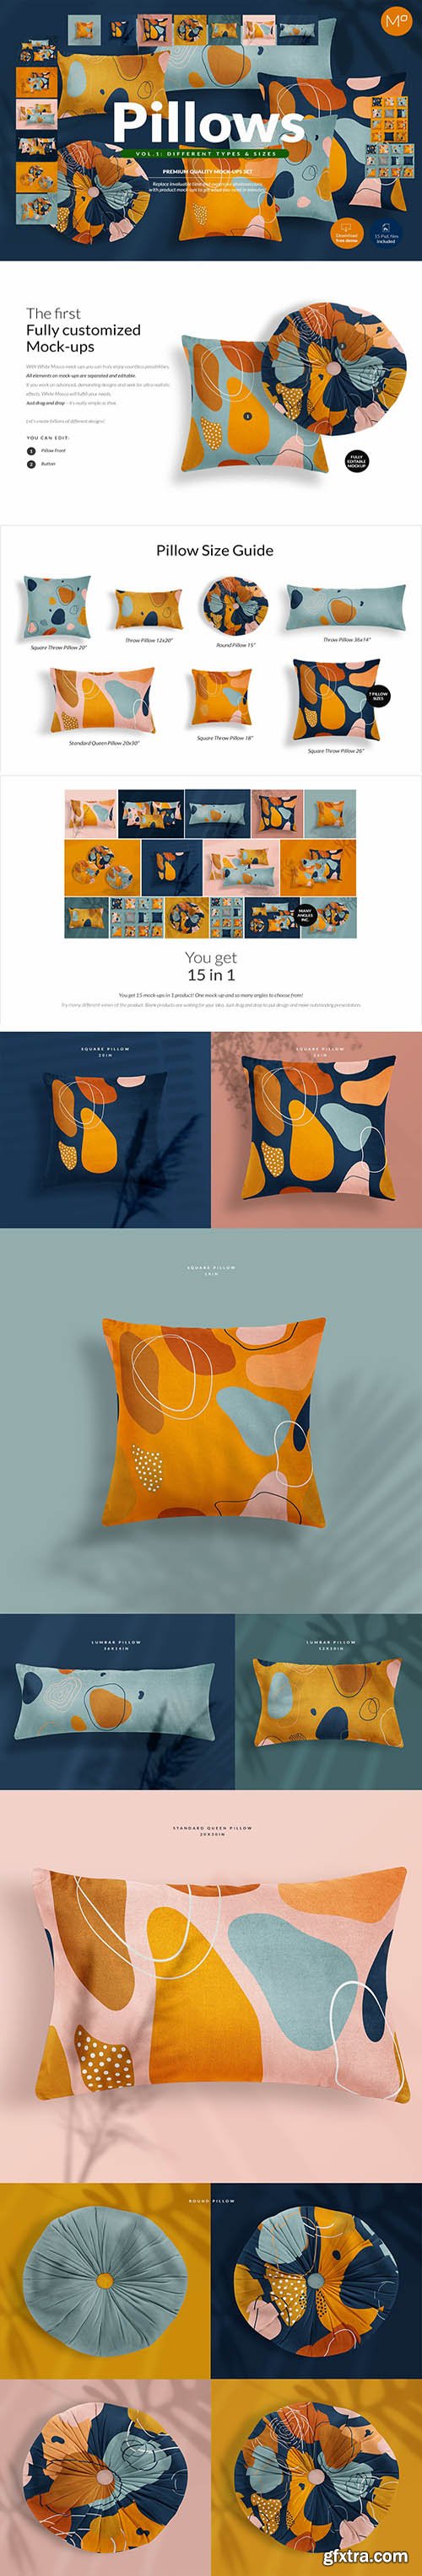 CreativeMarket - Pillows vol.1: Types & Sizes Mockups 5236271